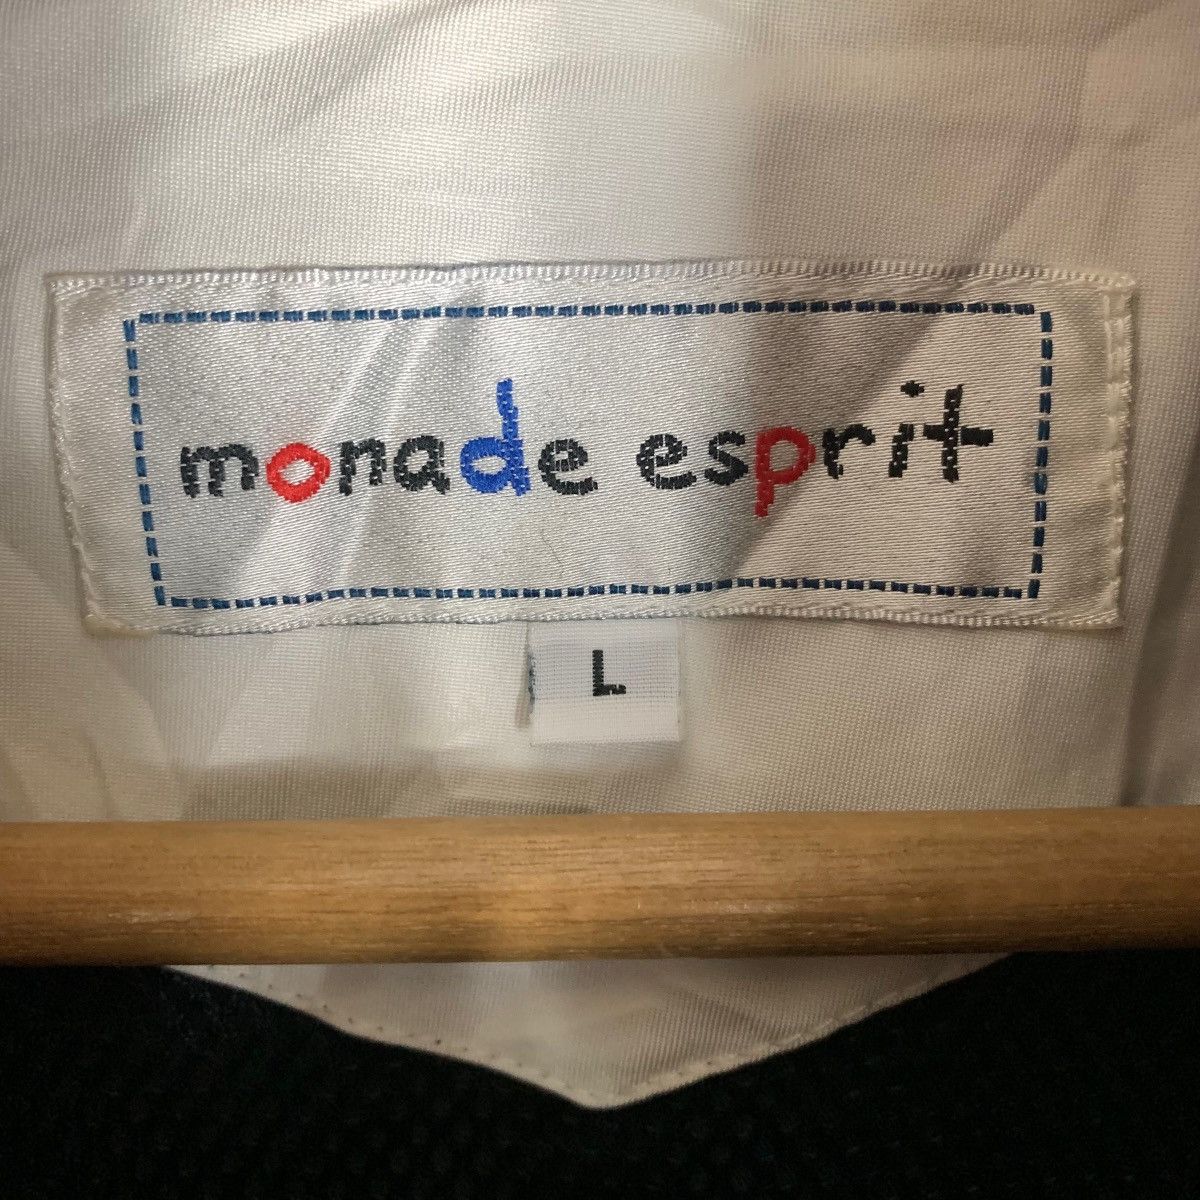 Esprit Vintage Monads Espirit Two Tone Zipper Coach Jacket Size US L / EU 52-54 / 3 - 10 Thumbnail